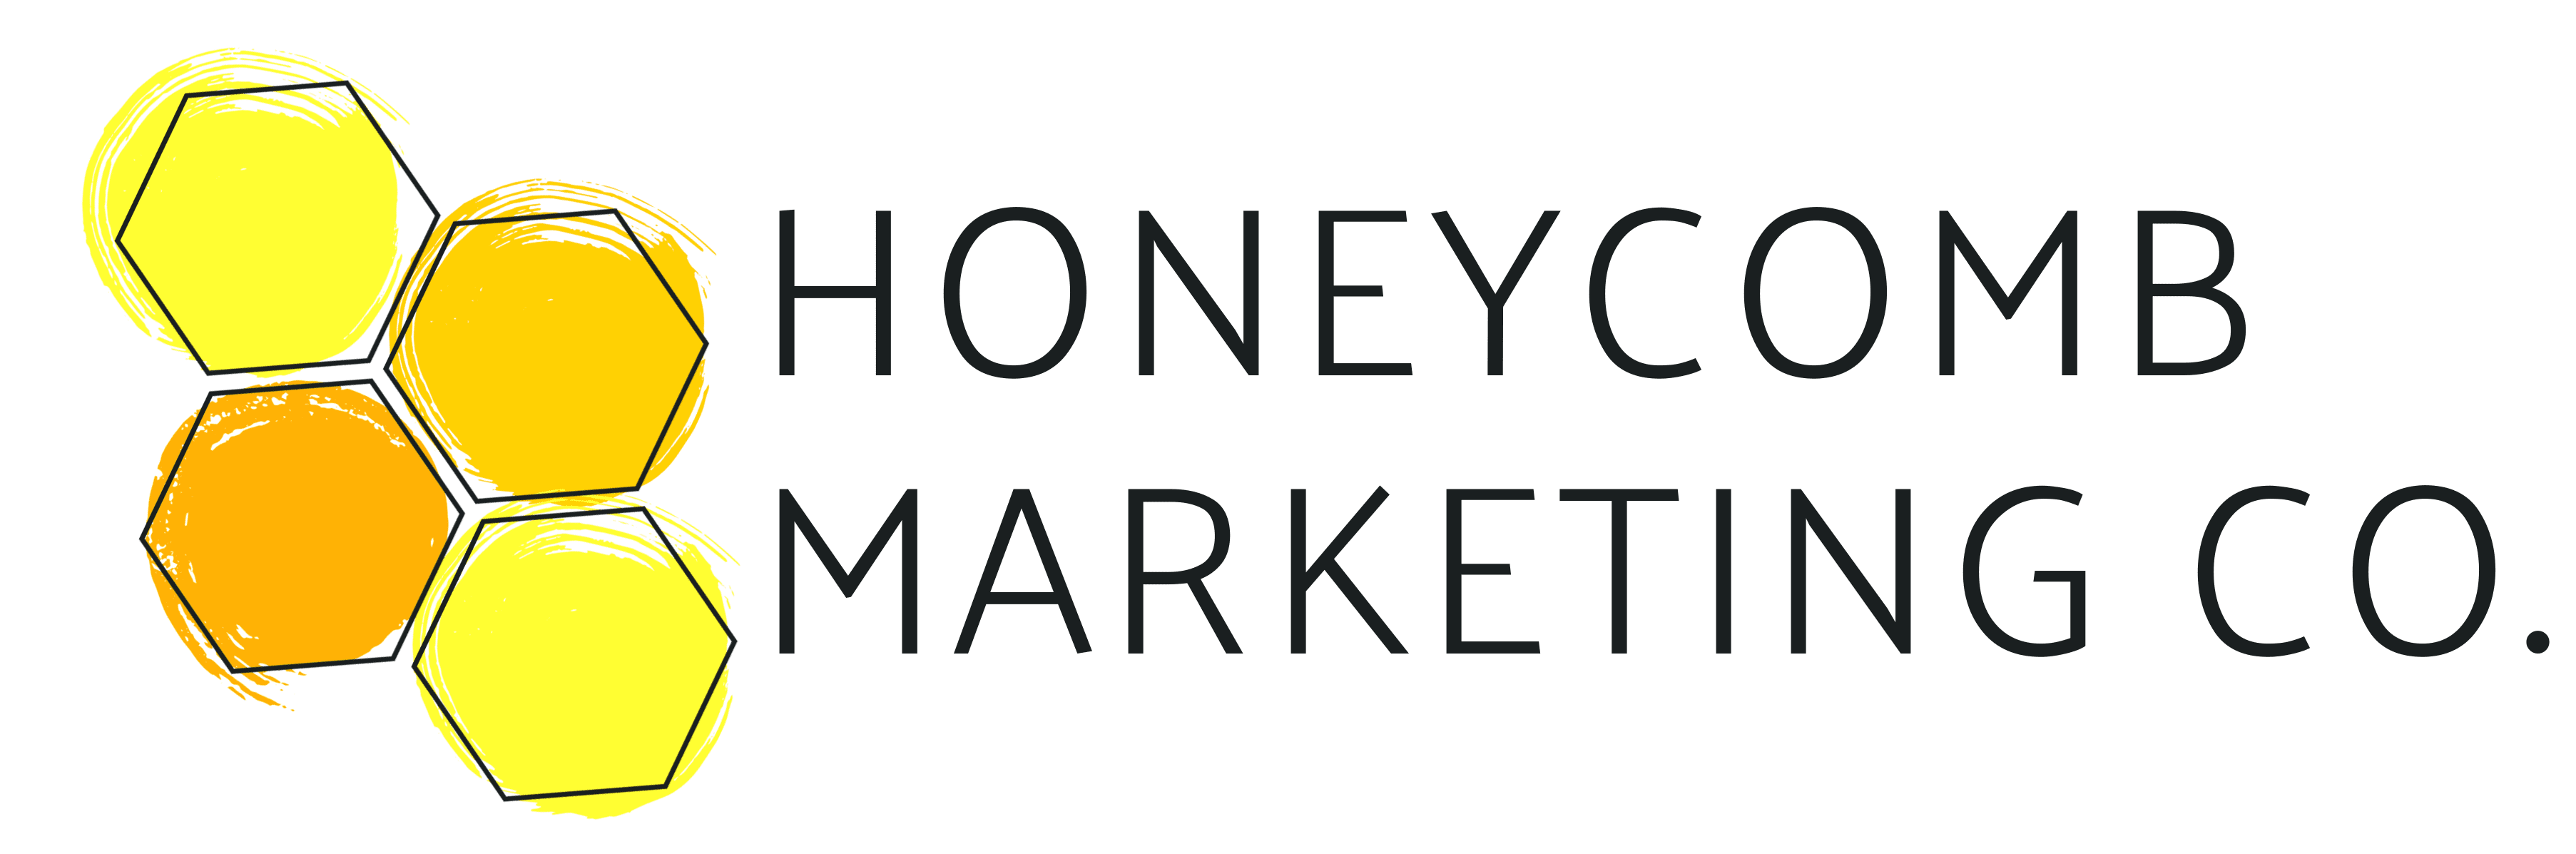 Honeycomb Marketing Co.